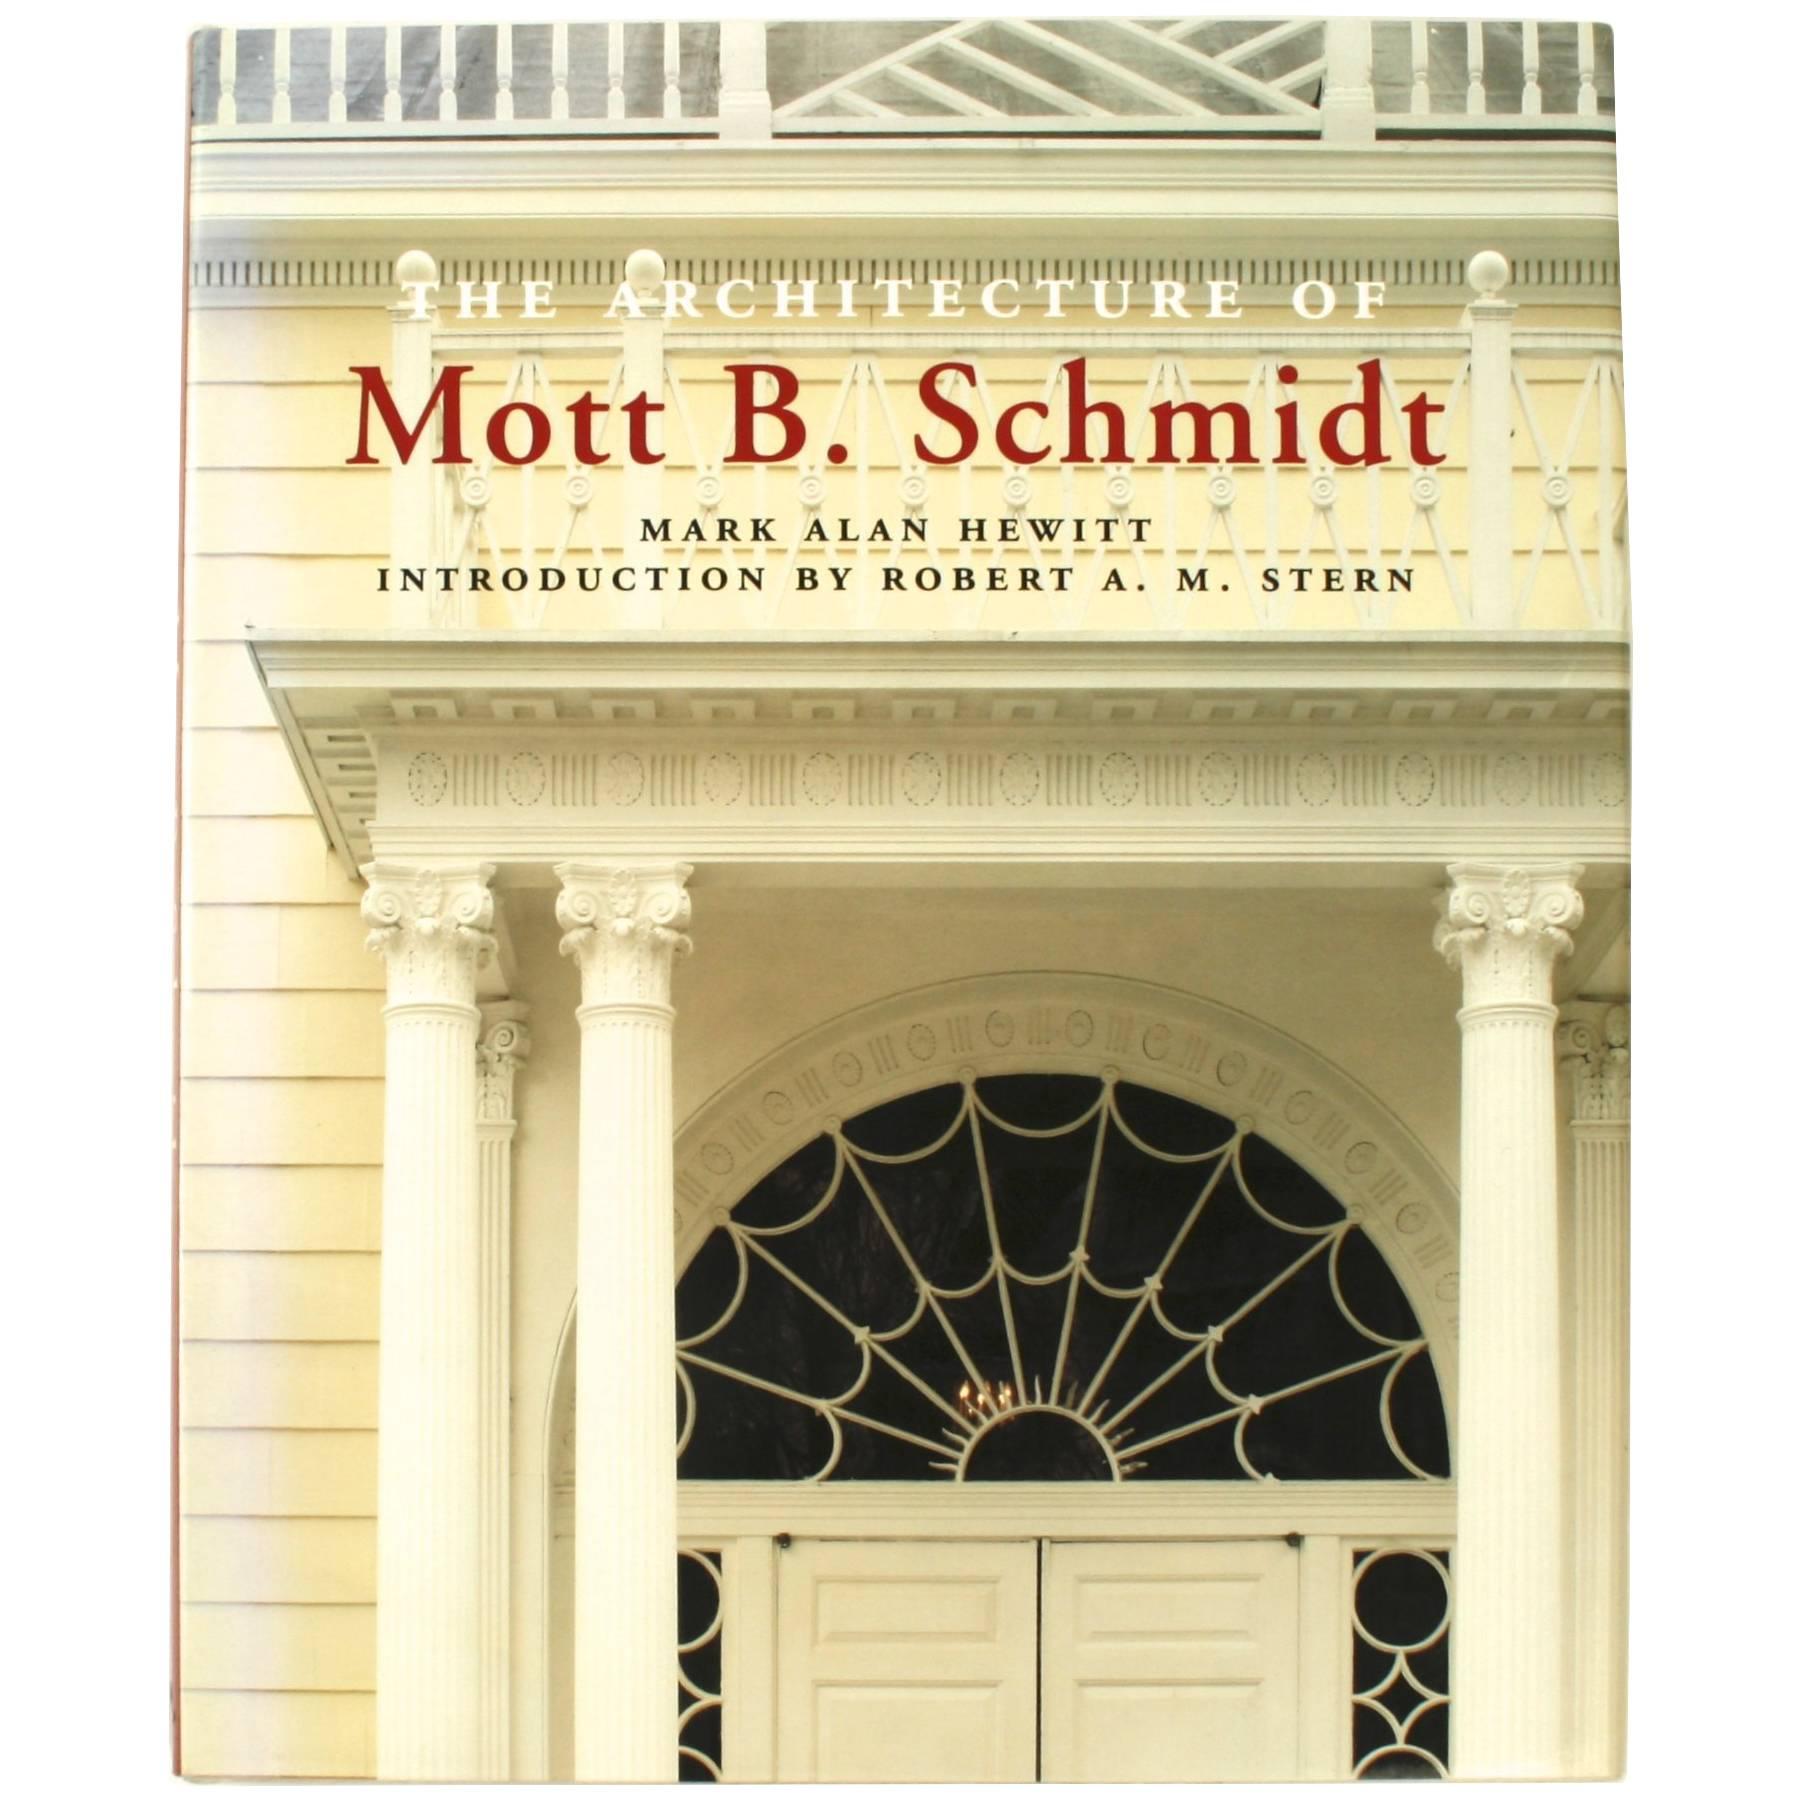 "Architecture of Mott B. Schmidt" First Edition Book